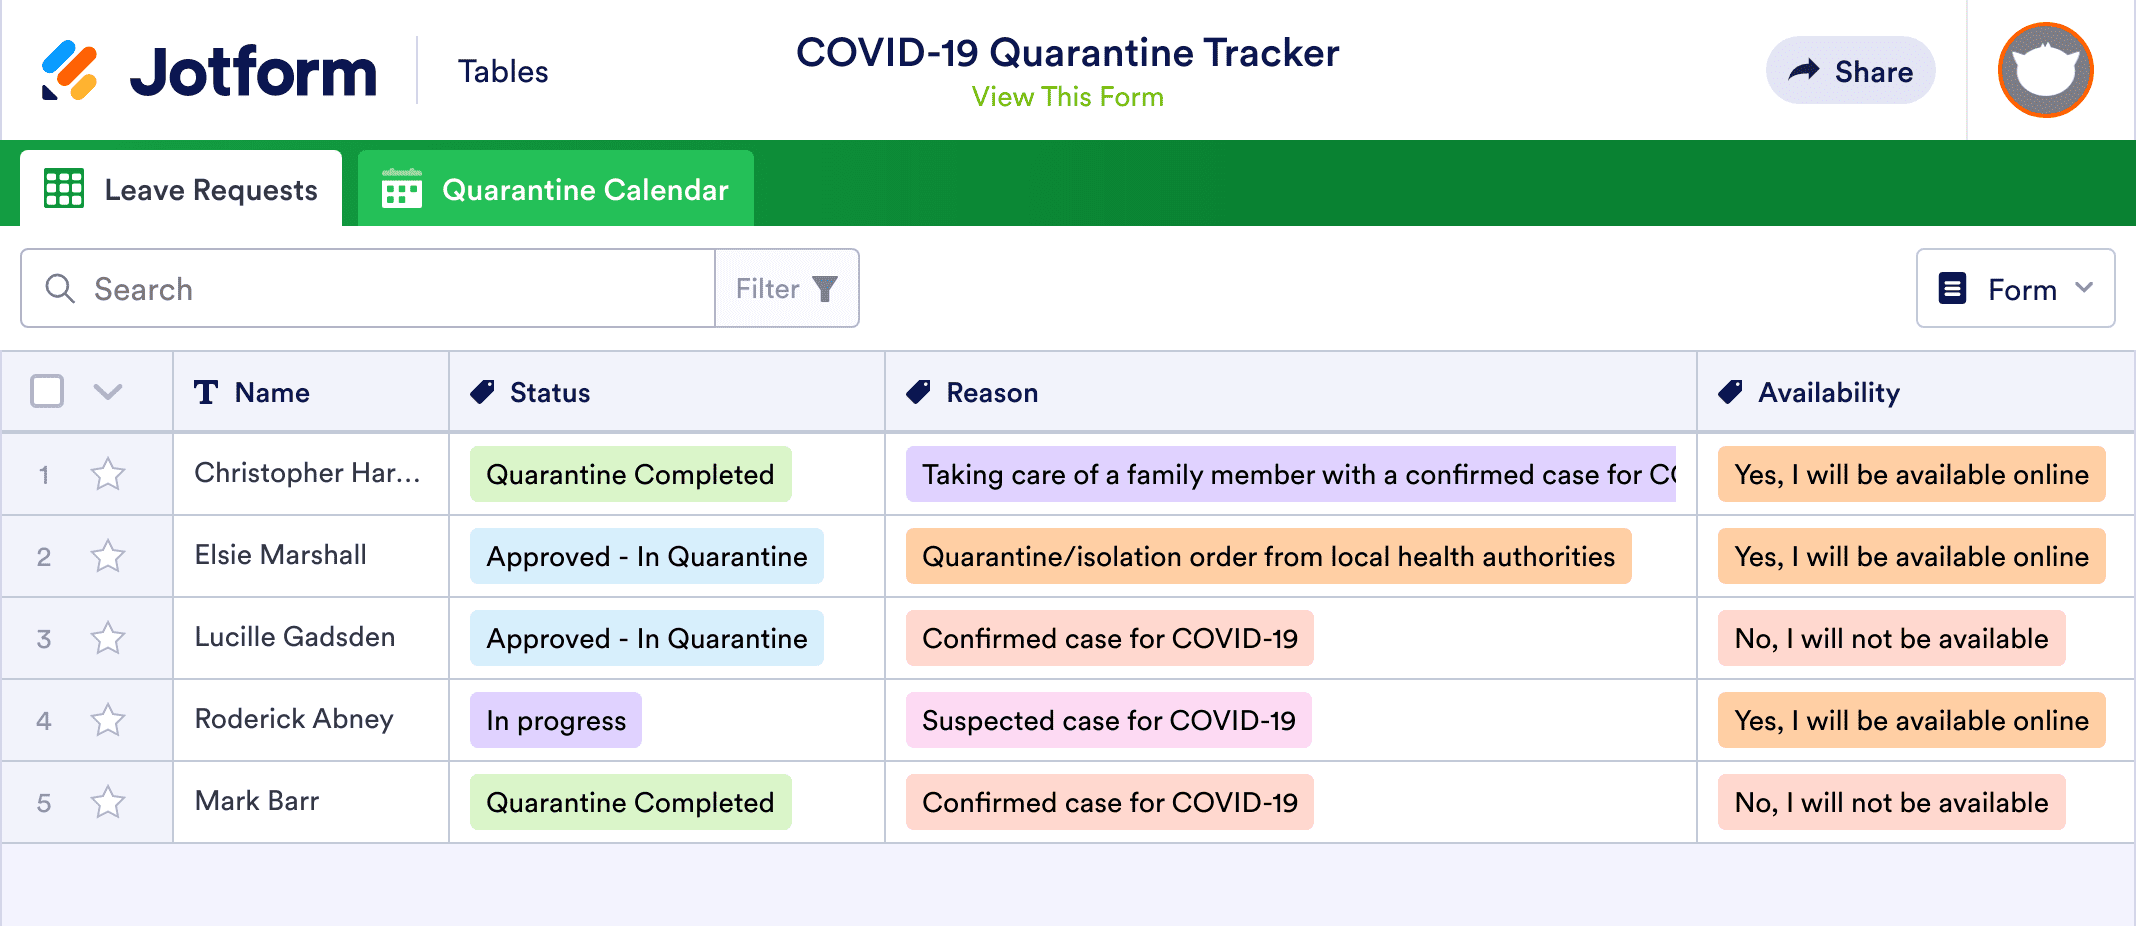 COVID-19 Quarantine Tracker